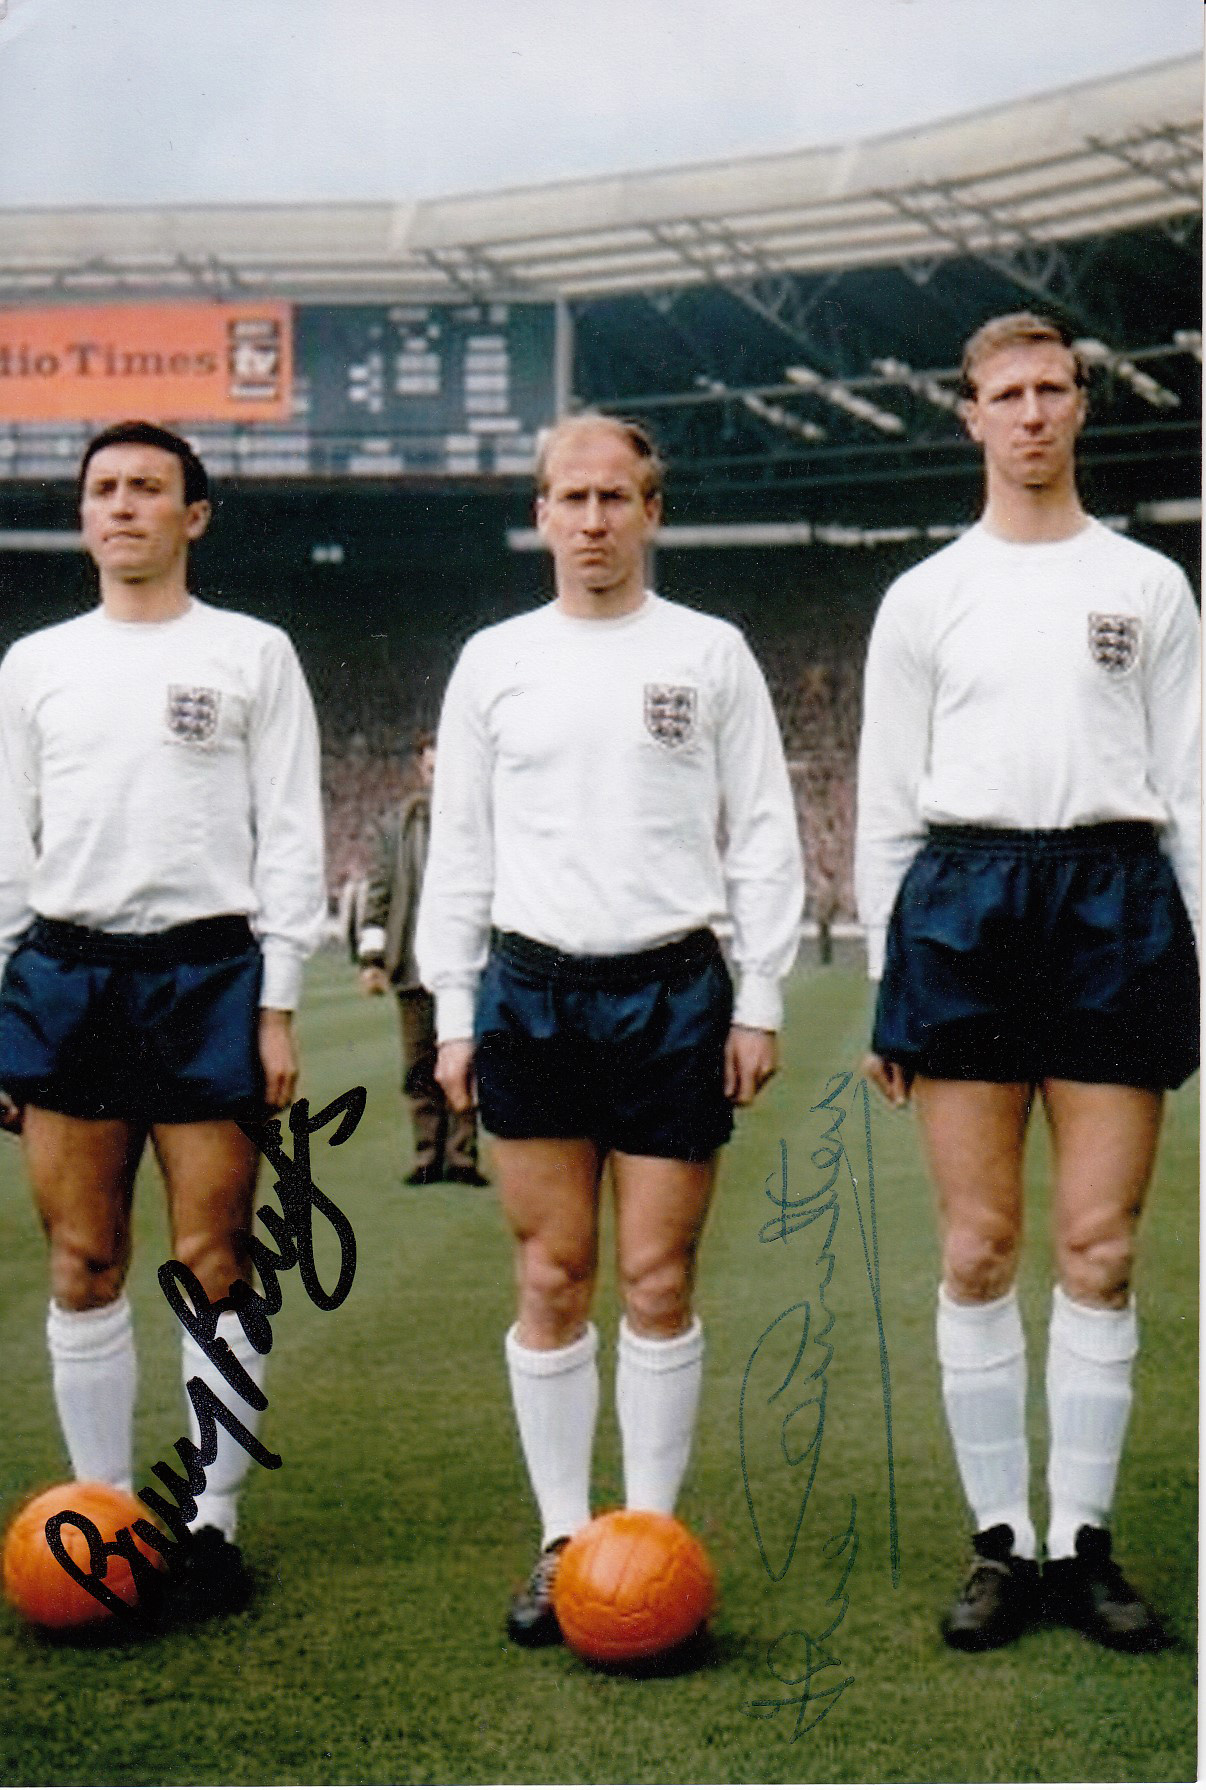 JACK CHARLTON 1965: Autographed 6 x 4 photo, depicting England's JACK CHARLTON, brother Bobby and